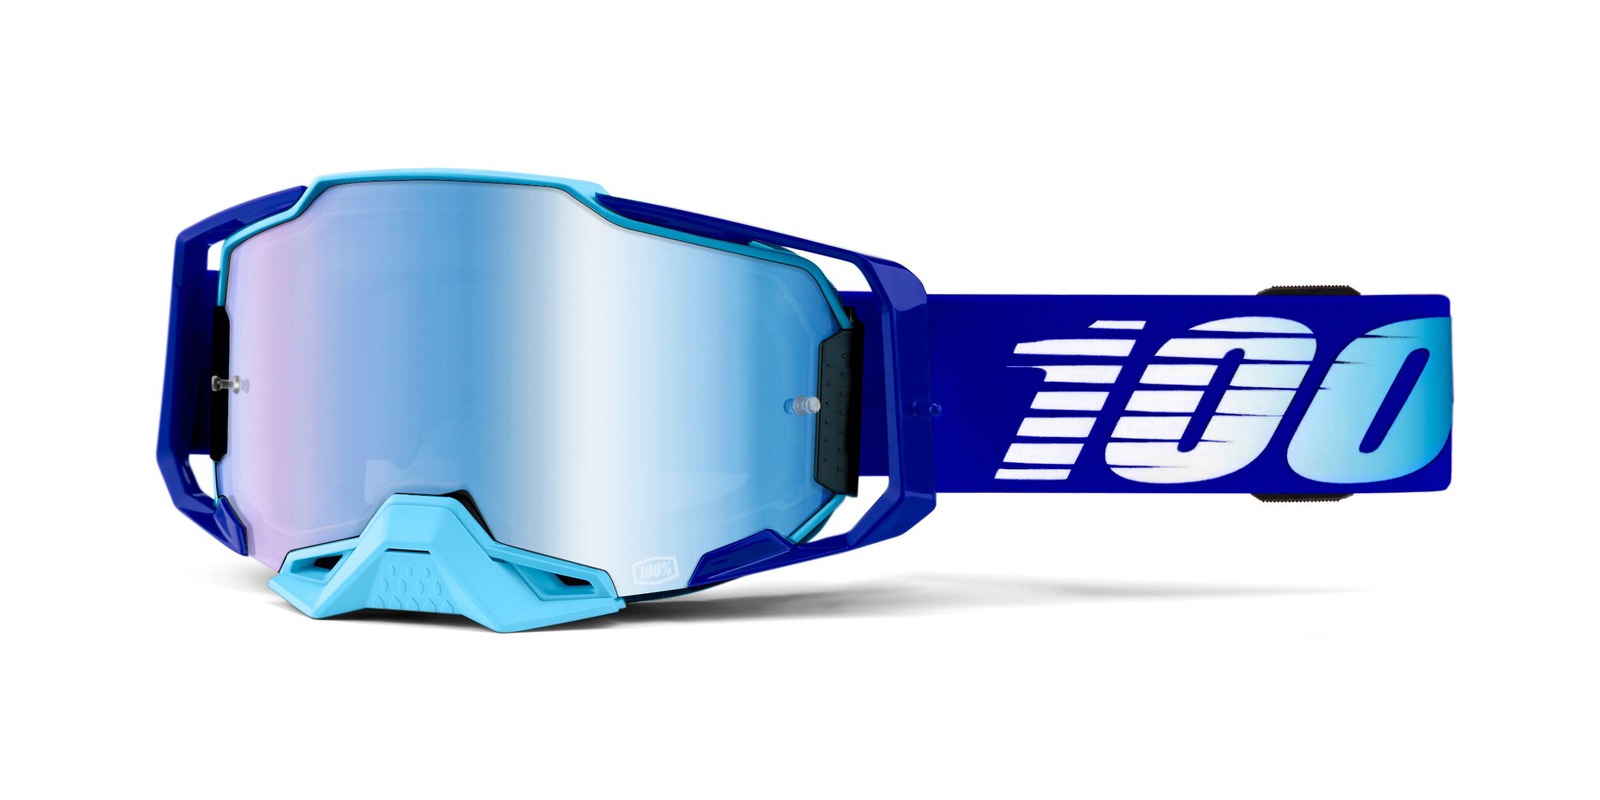 brýle ARMEGA Royal, 100% (modré chromované plexi s èepy pro slídy) - zvìtšit obrázek